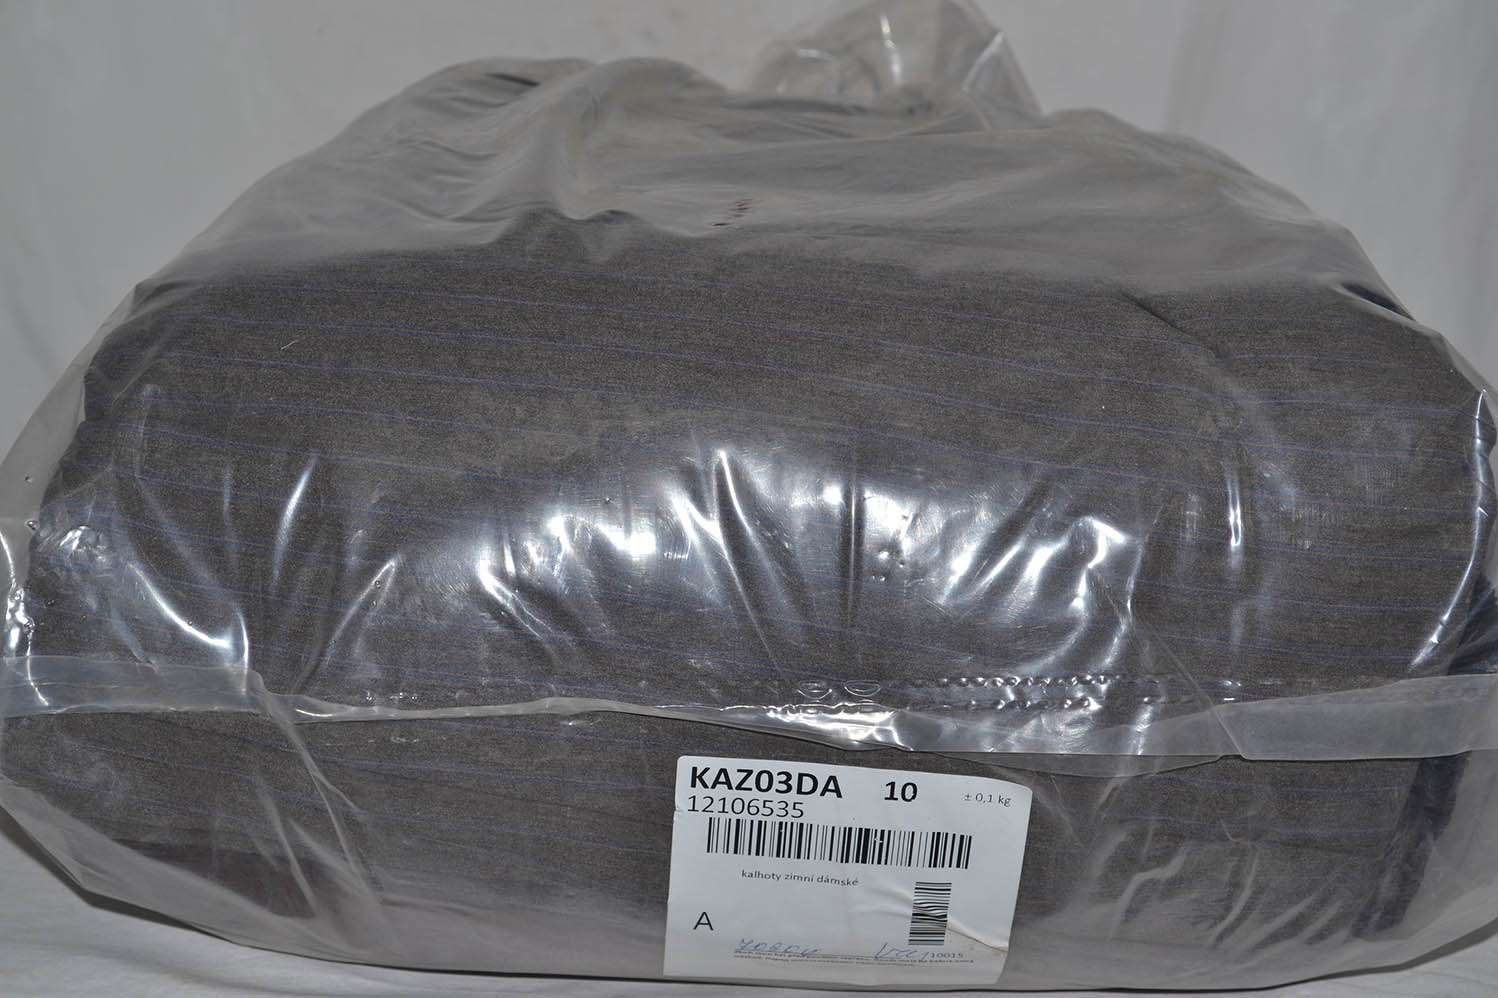 KAZ03DA Женские зимние брюки; код мешка 12106535